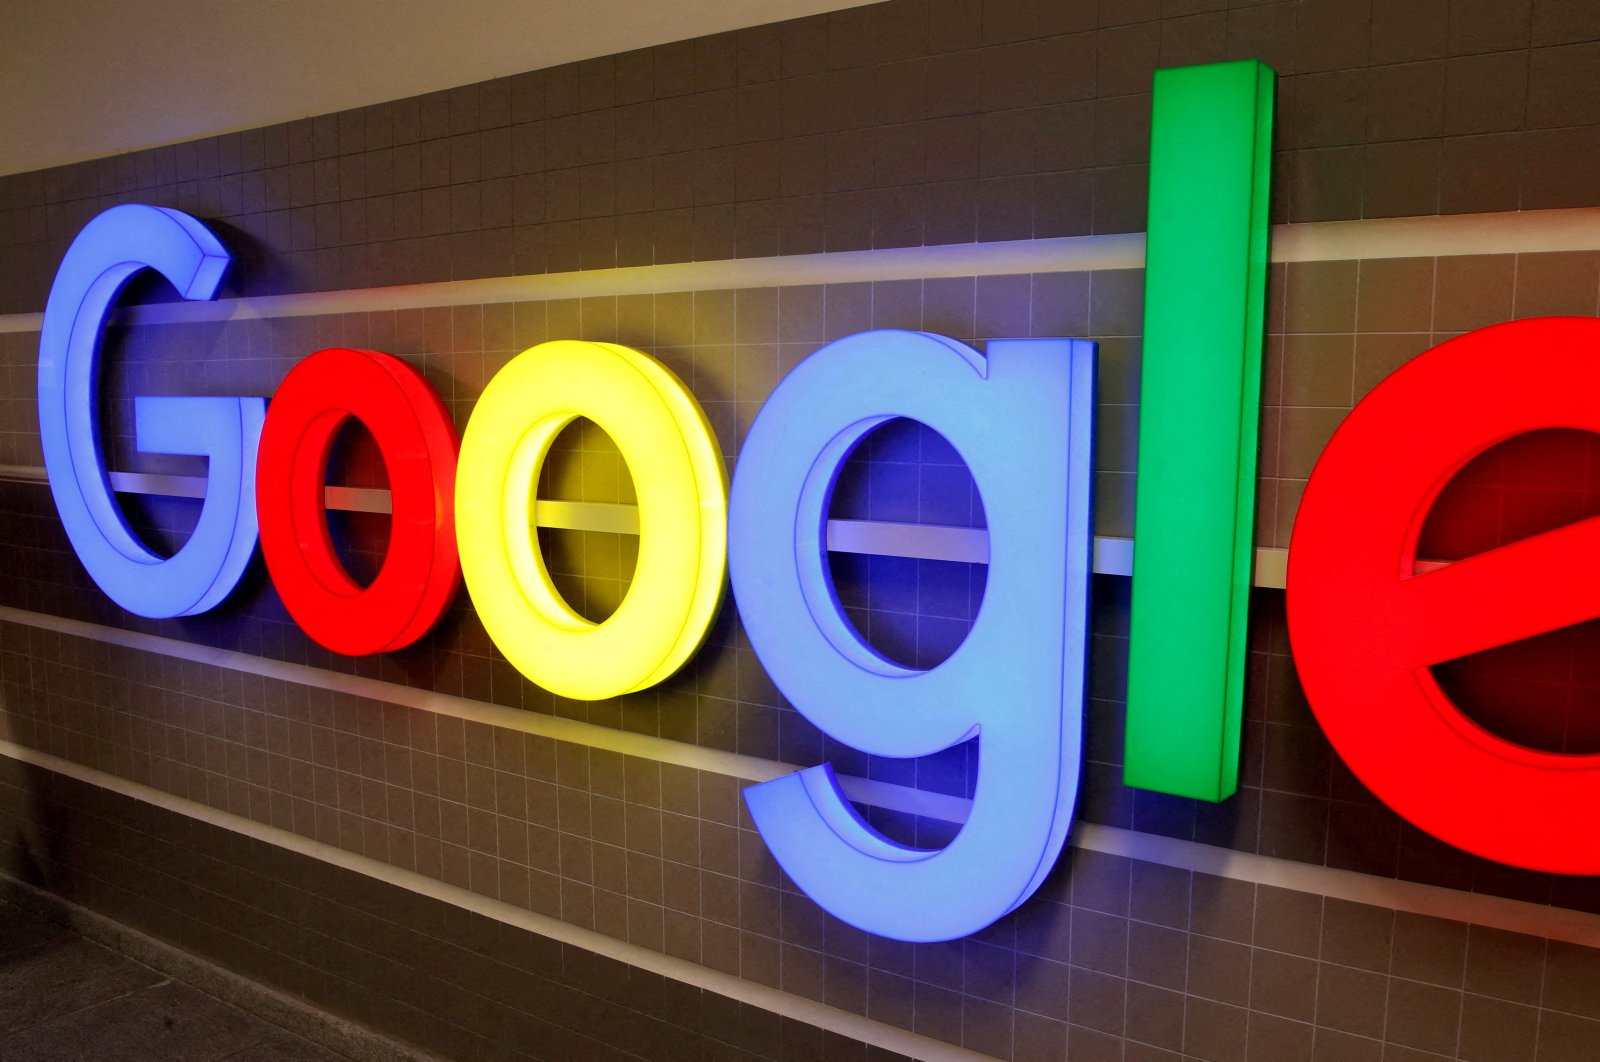 An illuminated Google logo is seen inside an office building in Zurich, Switzerland, Dec. 5, 2018. (Reuters Photo)